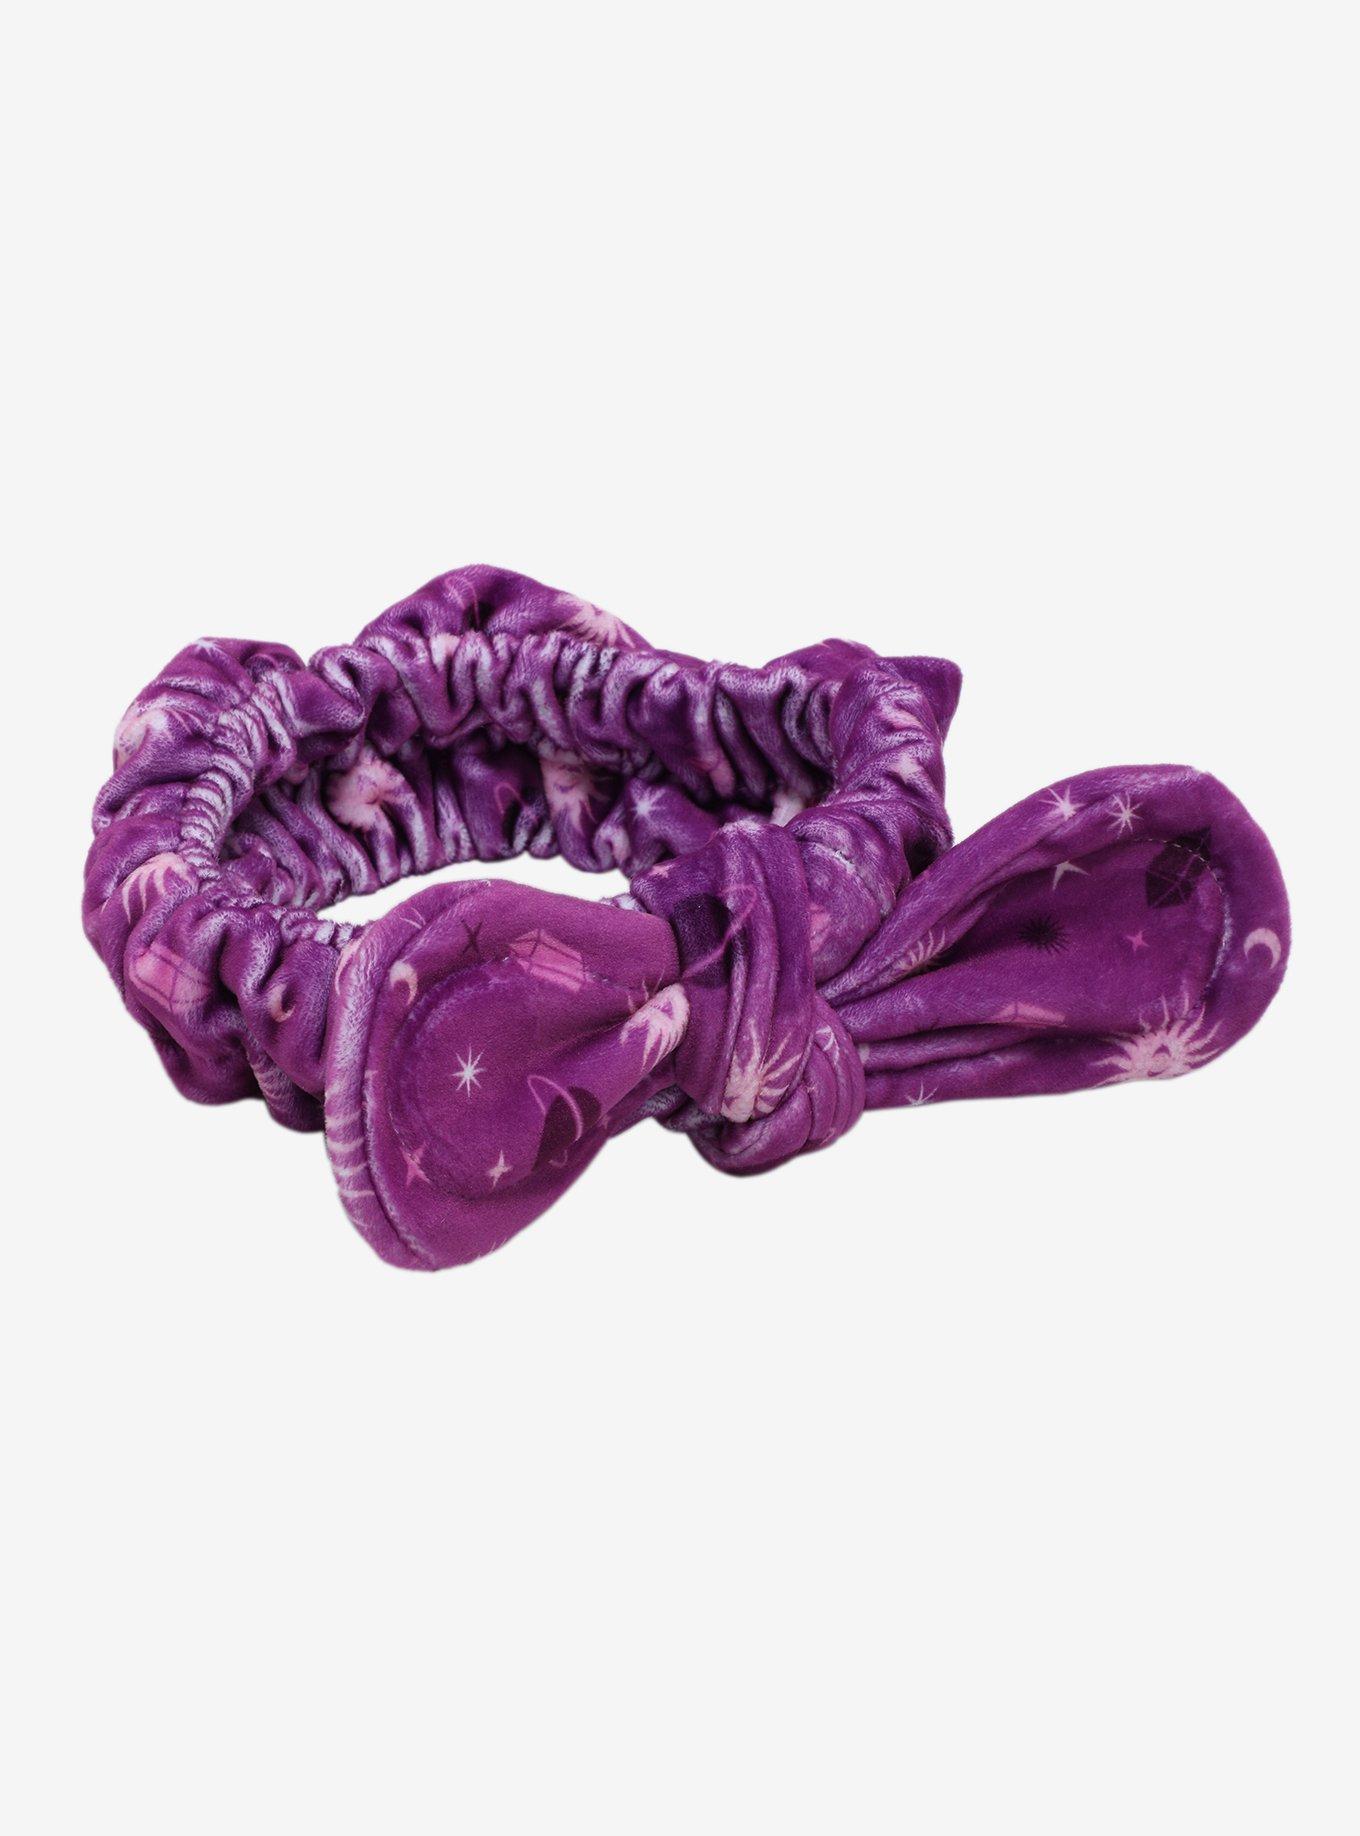 Purple Celestial Spa Headband, , hi-res